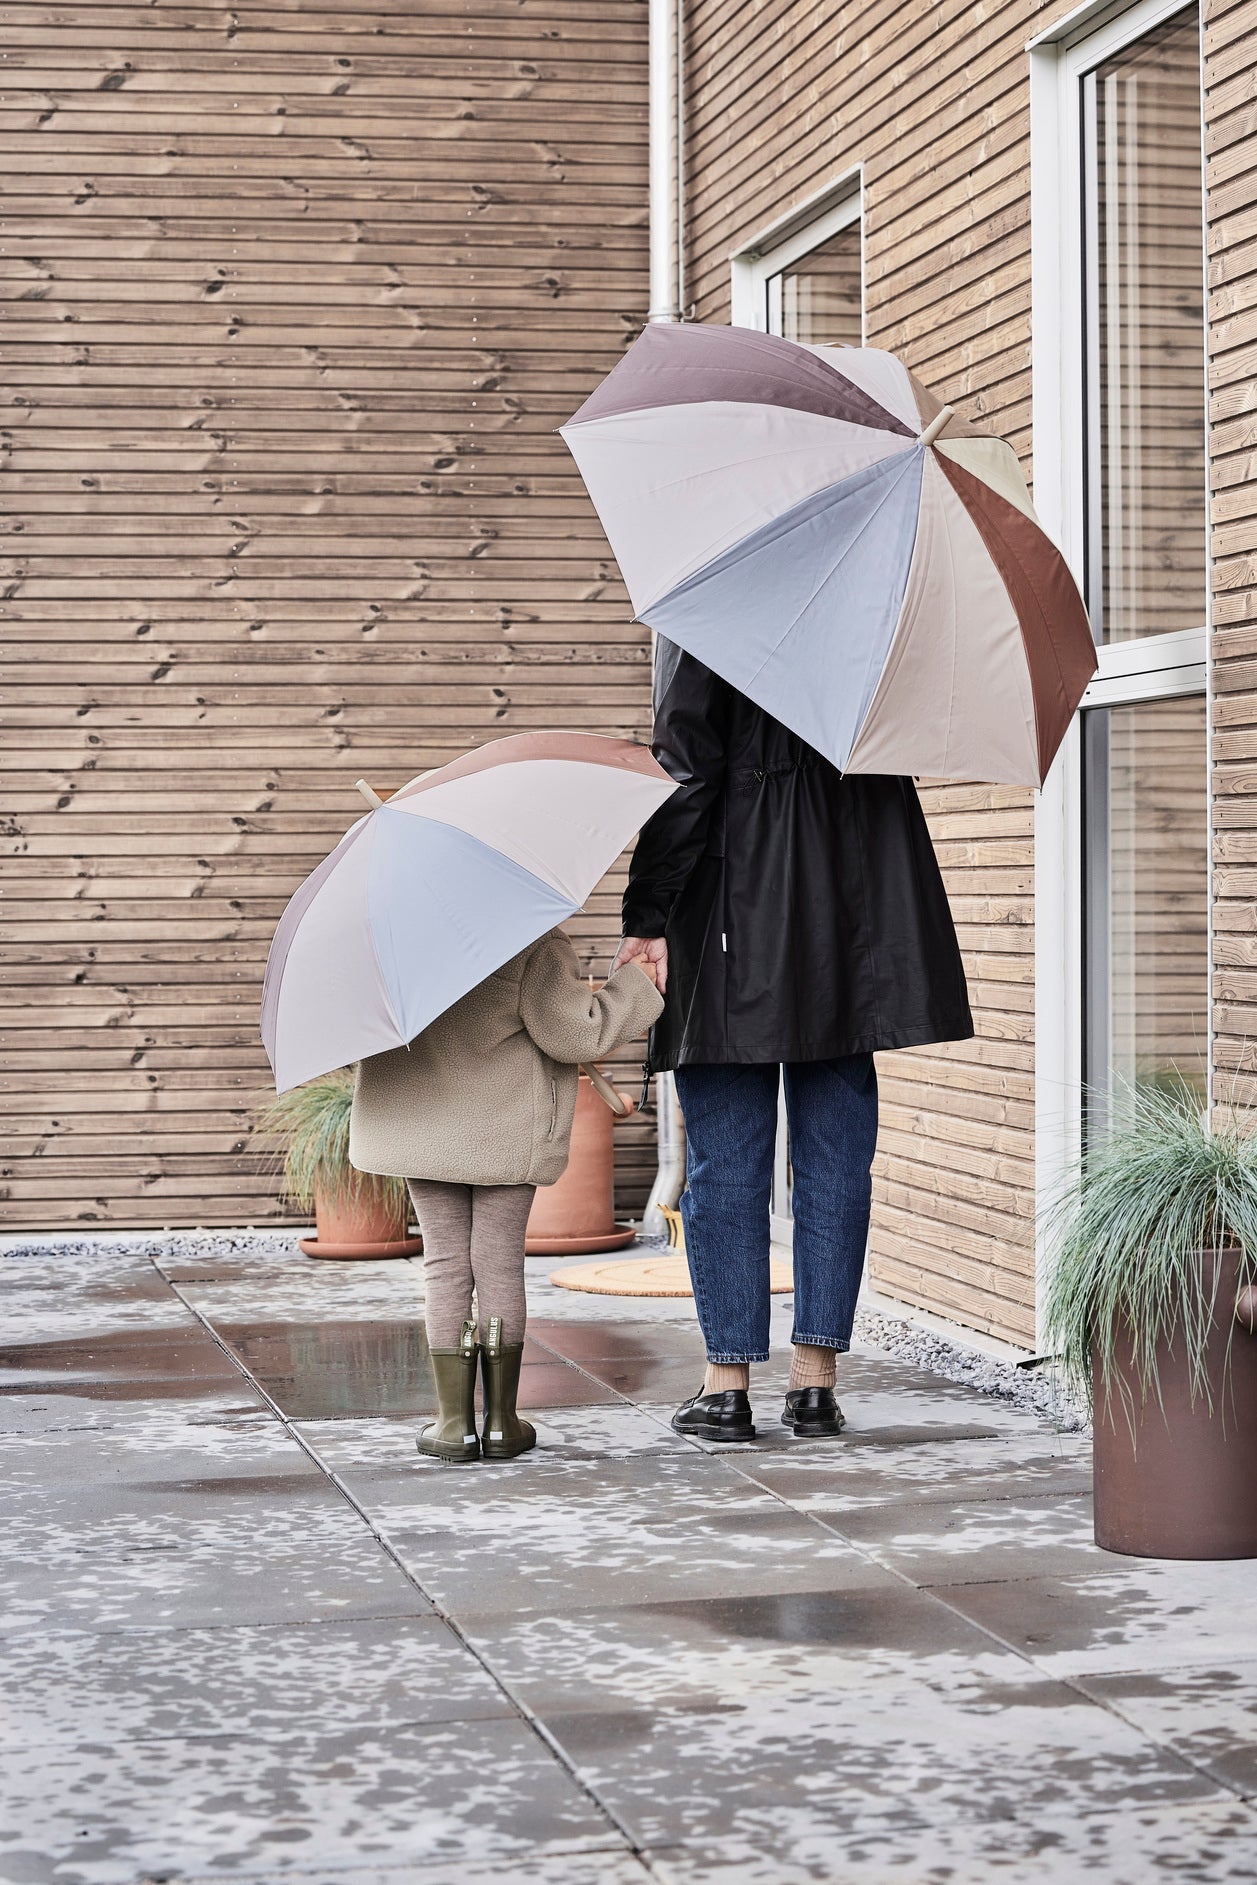 Moni Umbrella - Mini